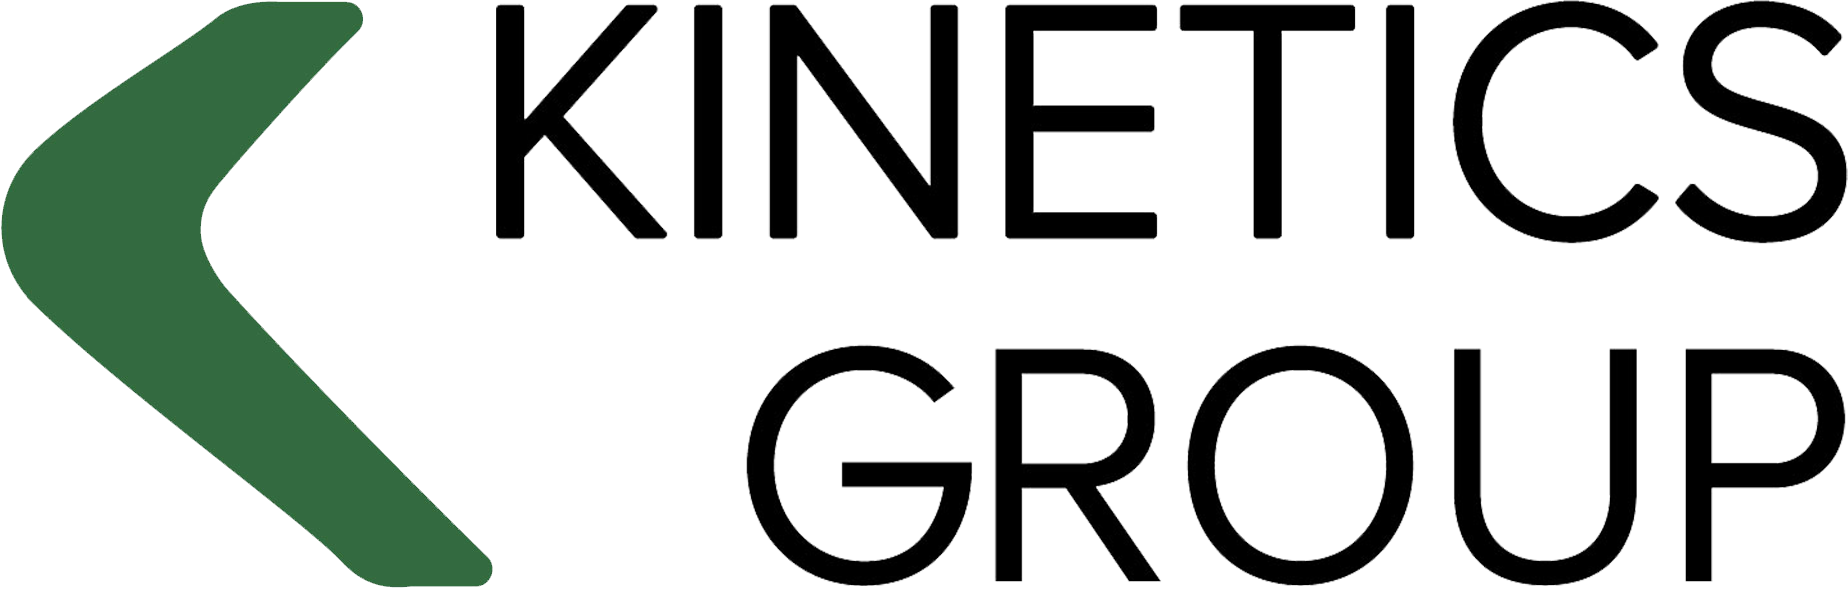 Kinetics Group logo